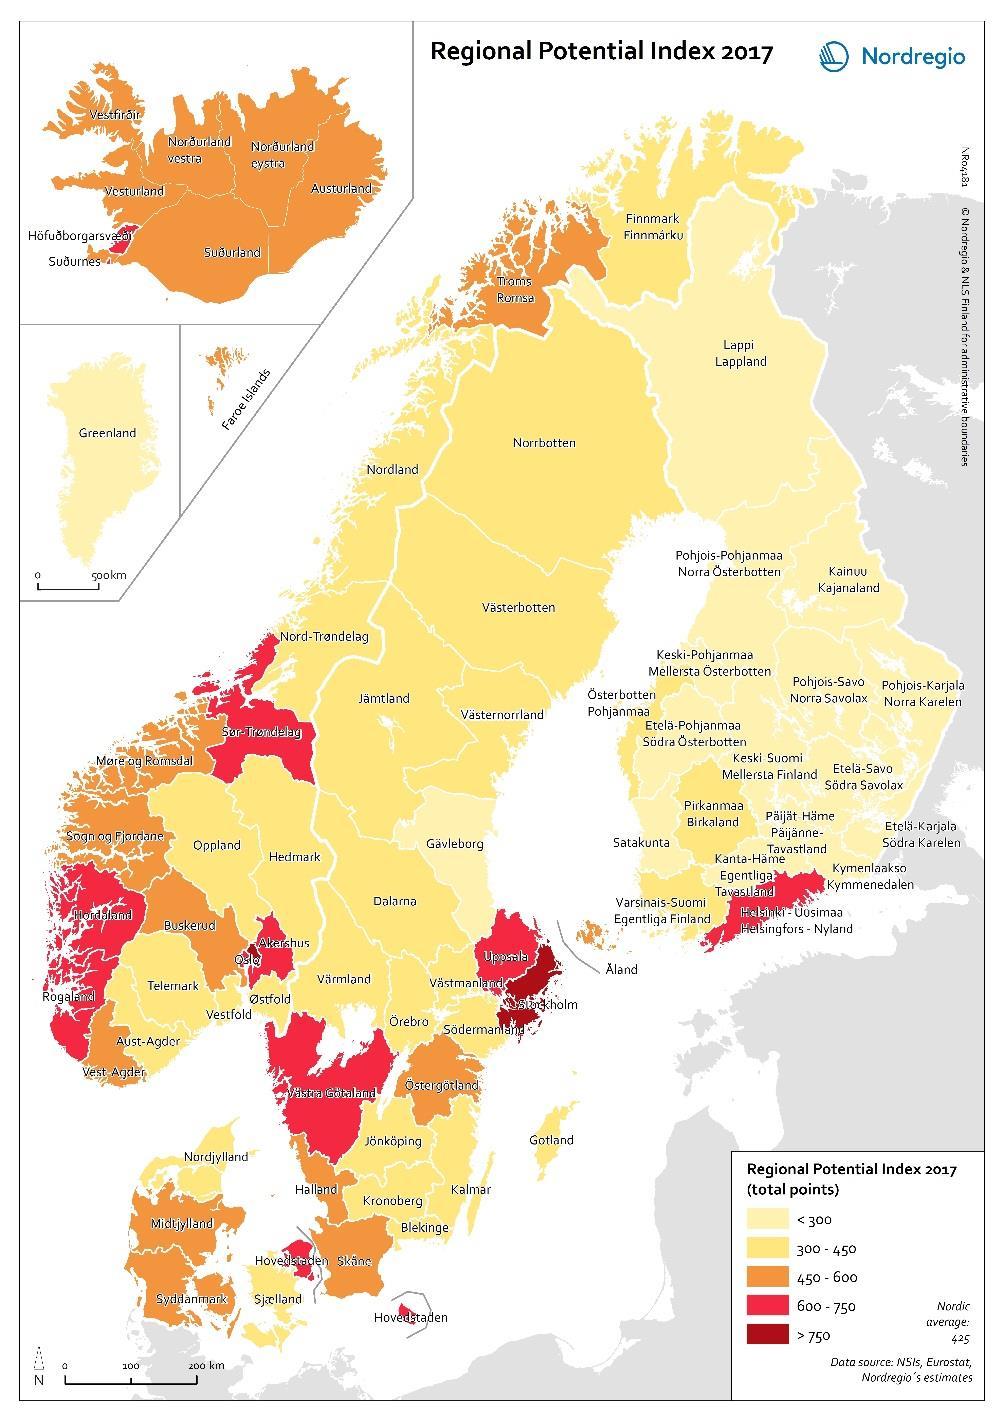 Regional Potential Index Nordregio s "Regional Potential Index" er bygget opp rundt en